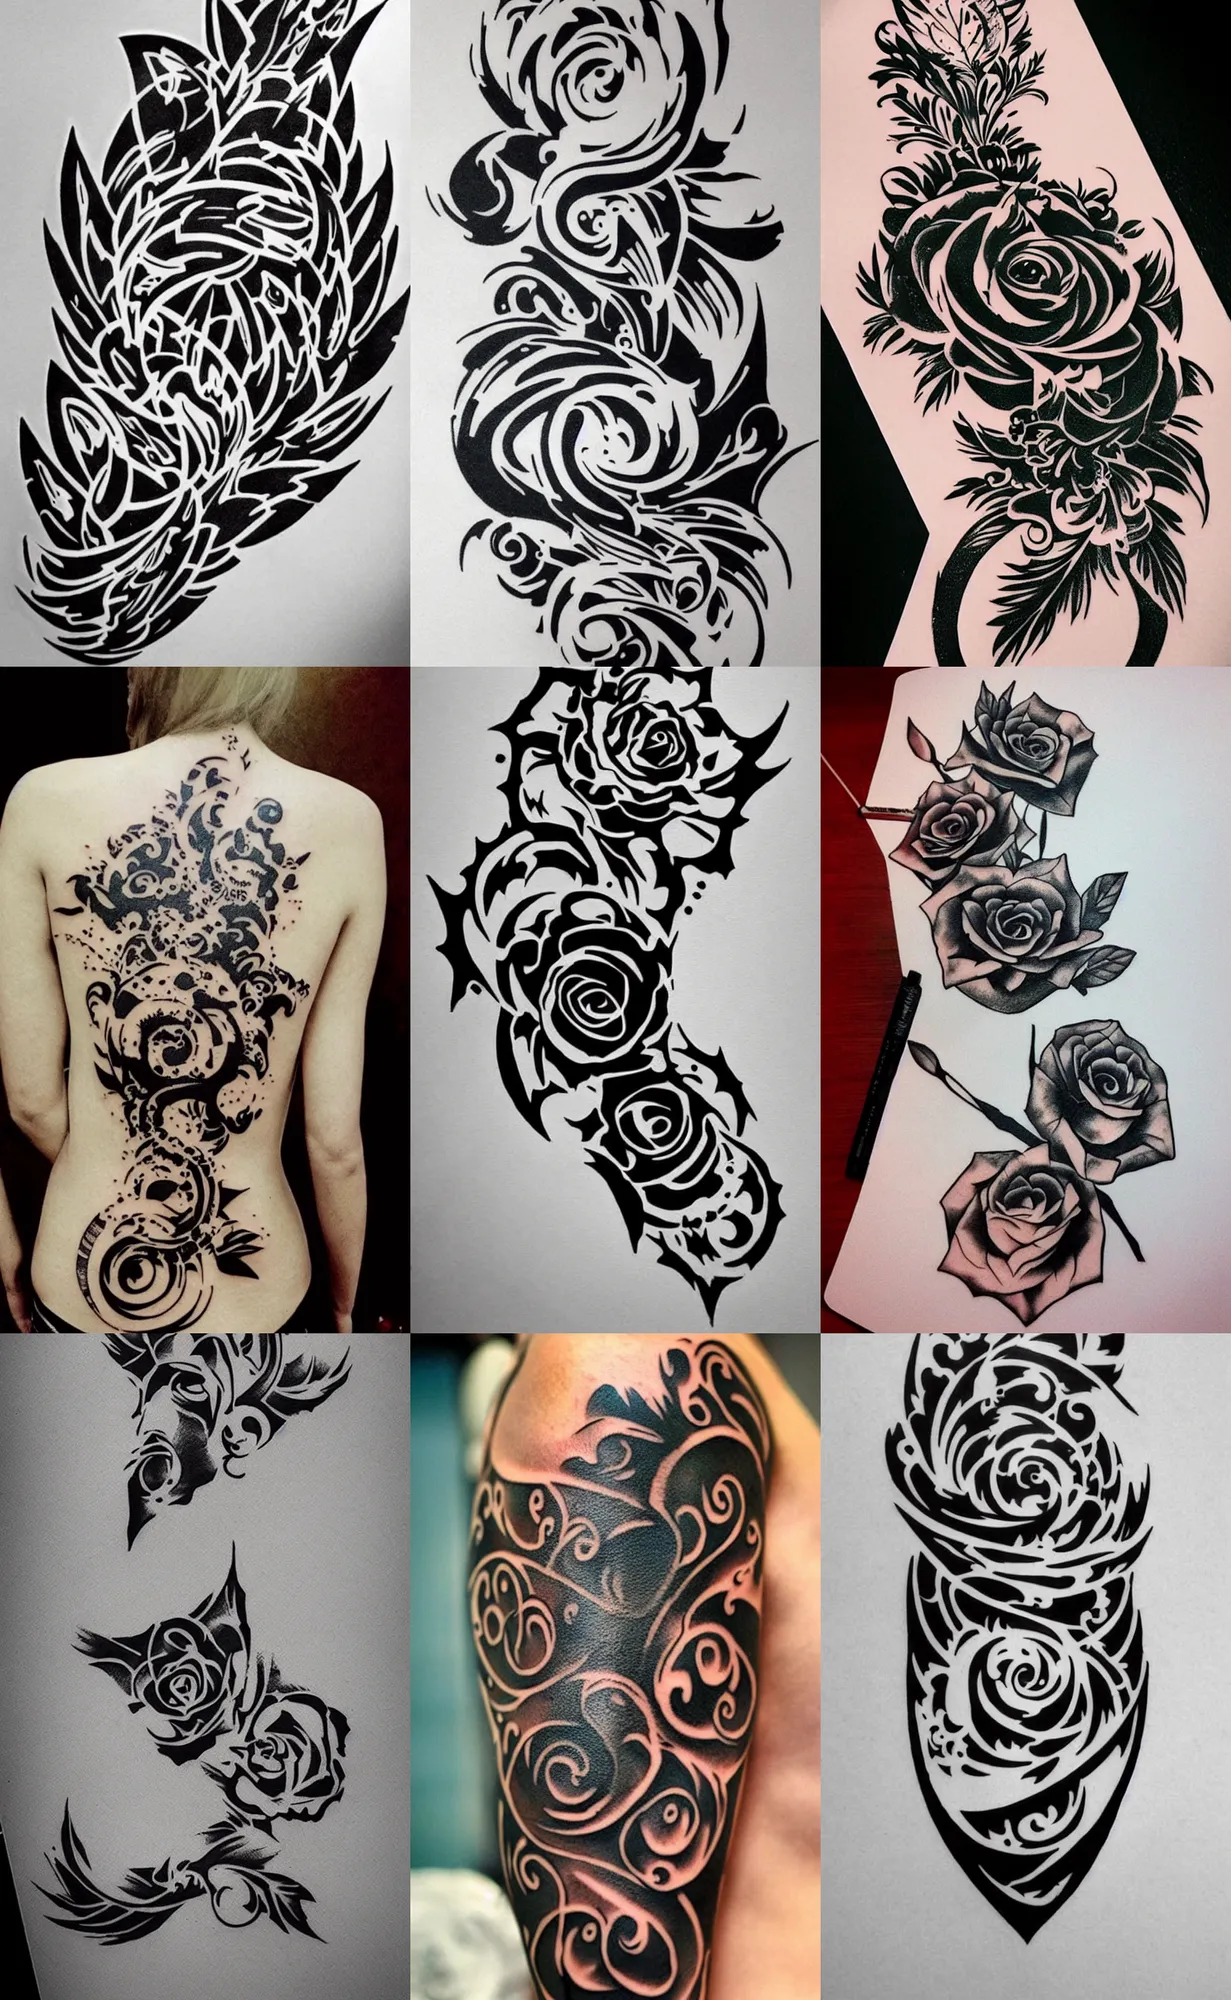 Create realism and full sleeve tattoo design by Slanuu | Fiverr